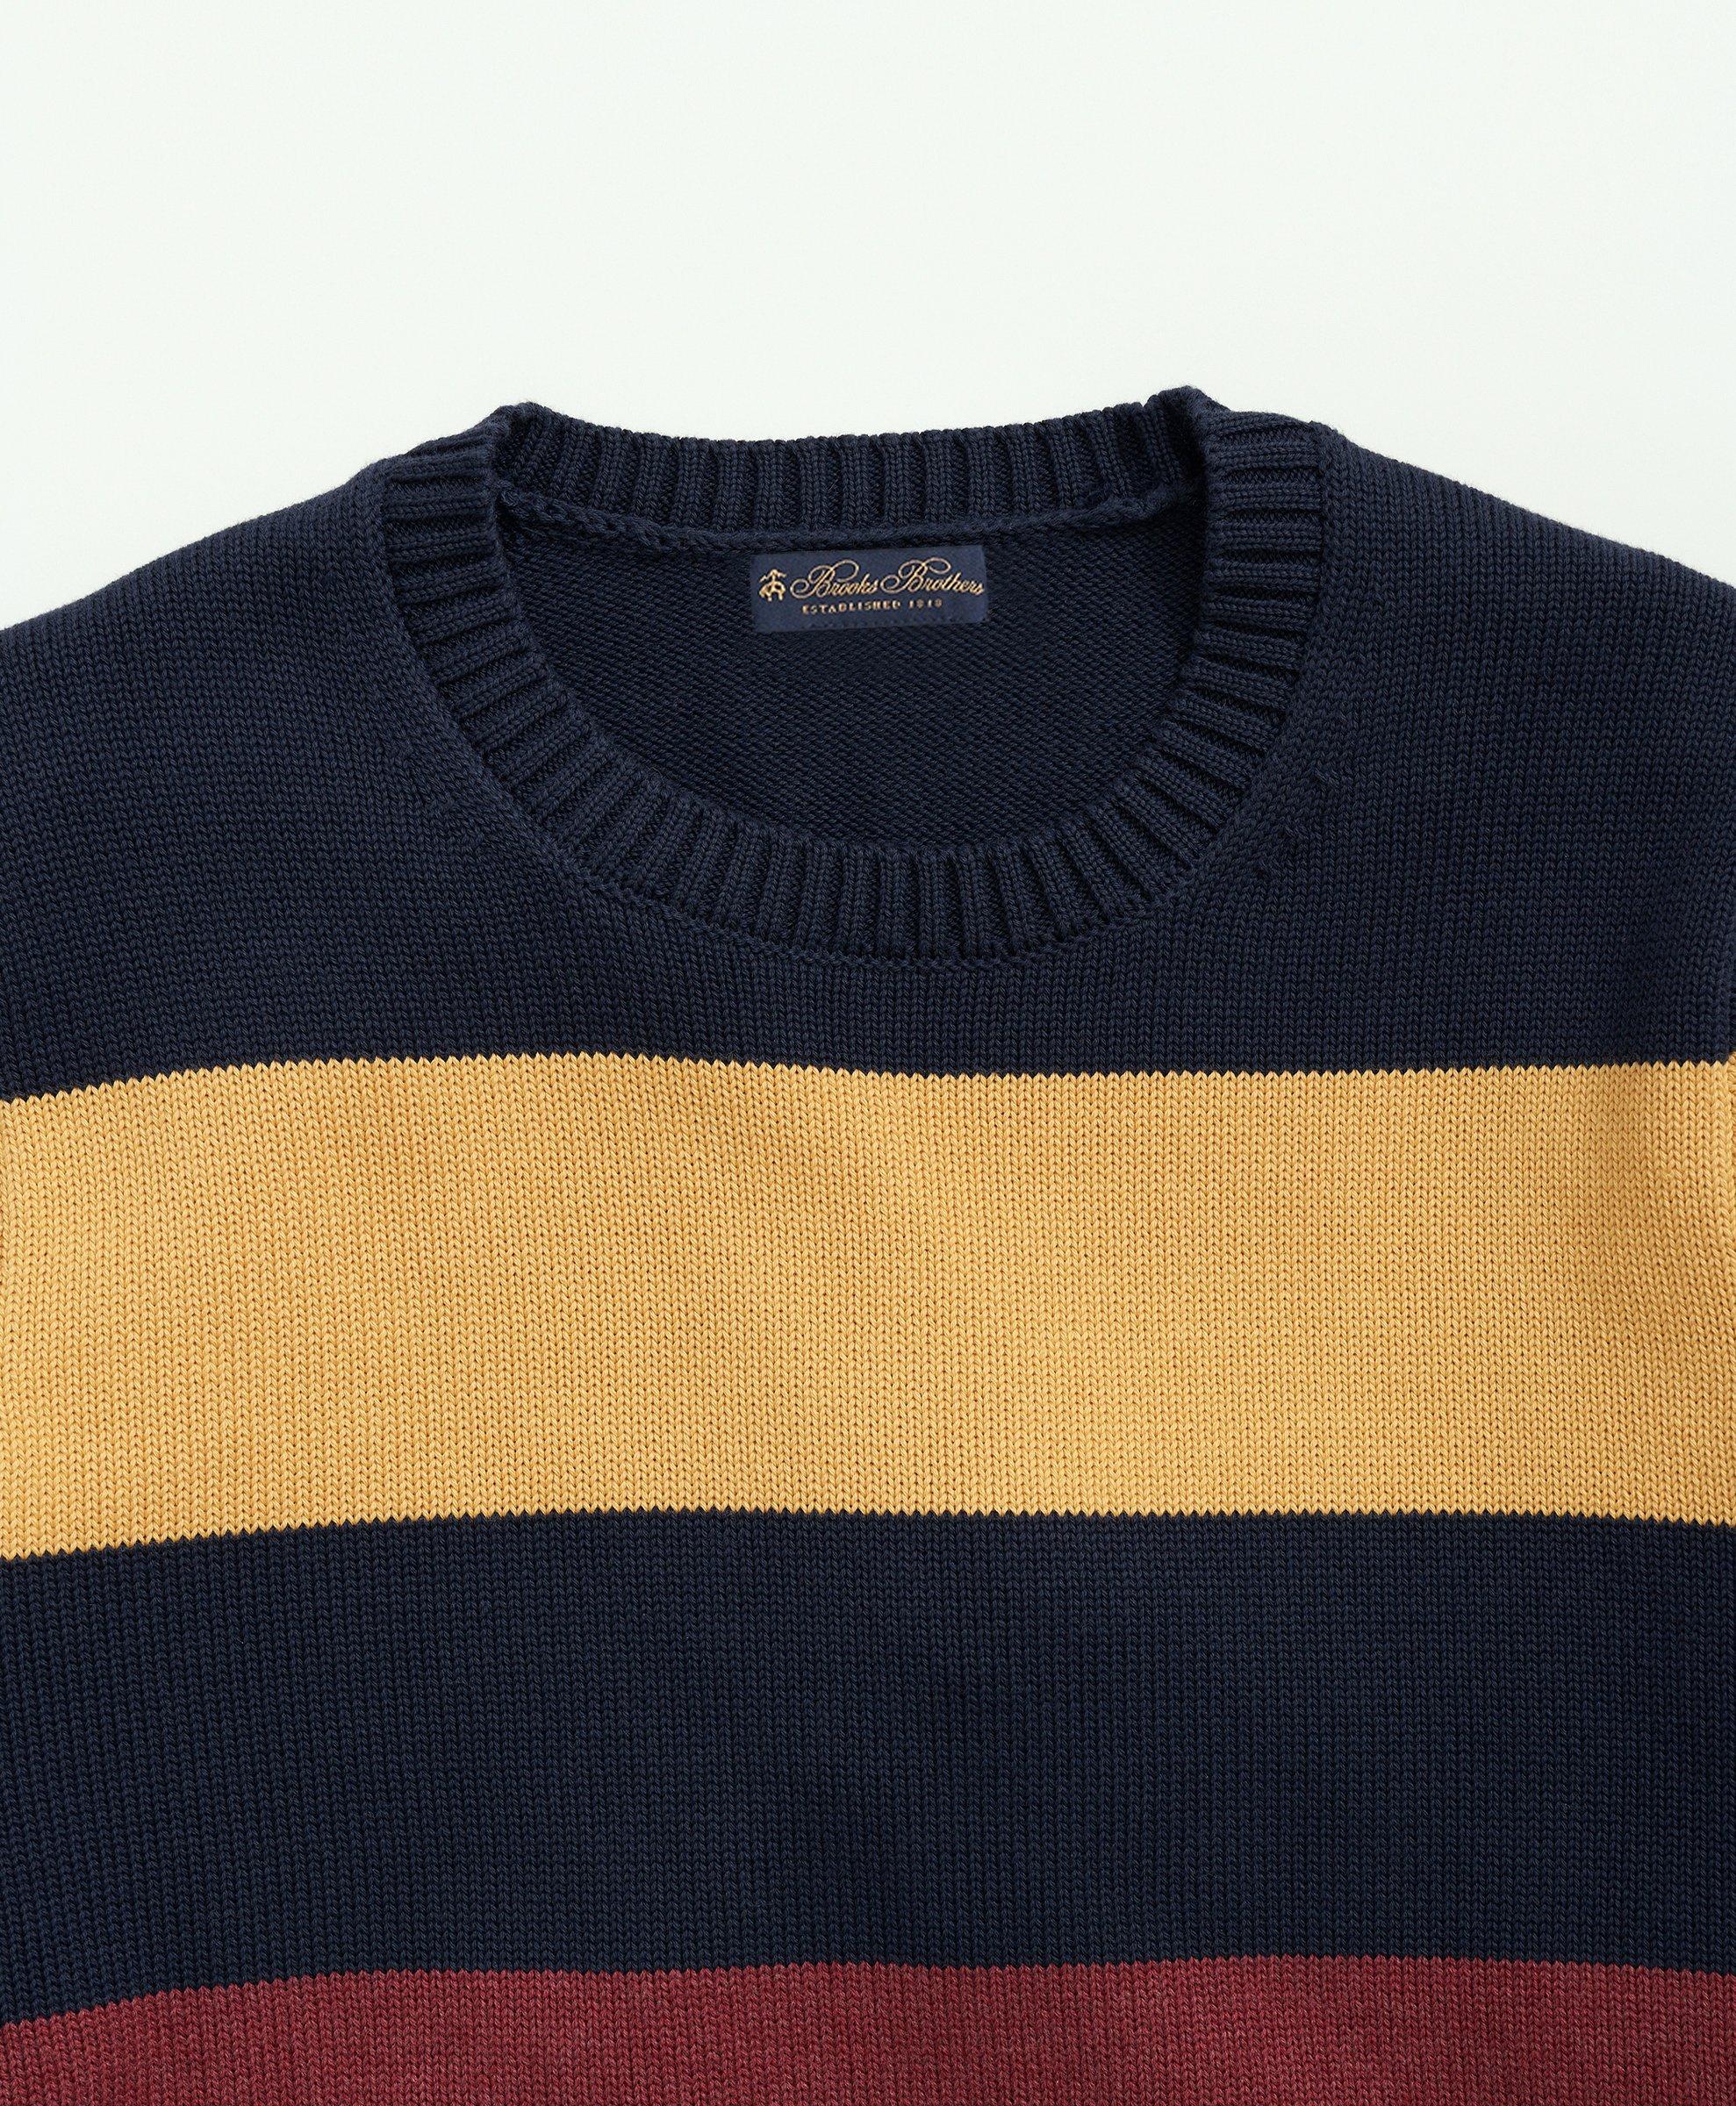 Cotton Crewneck Rugby Stripe Sweater, image 2